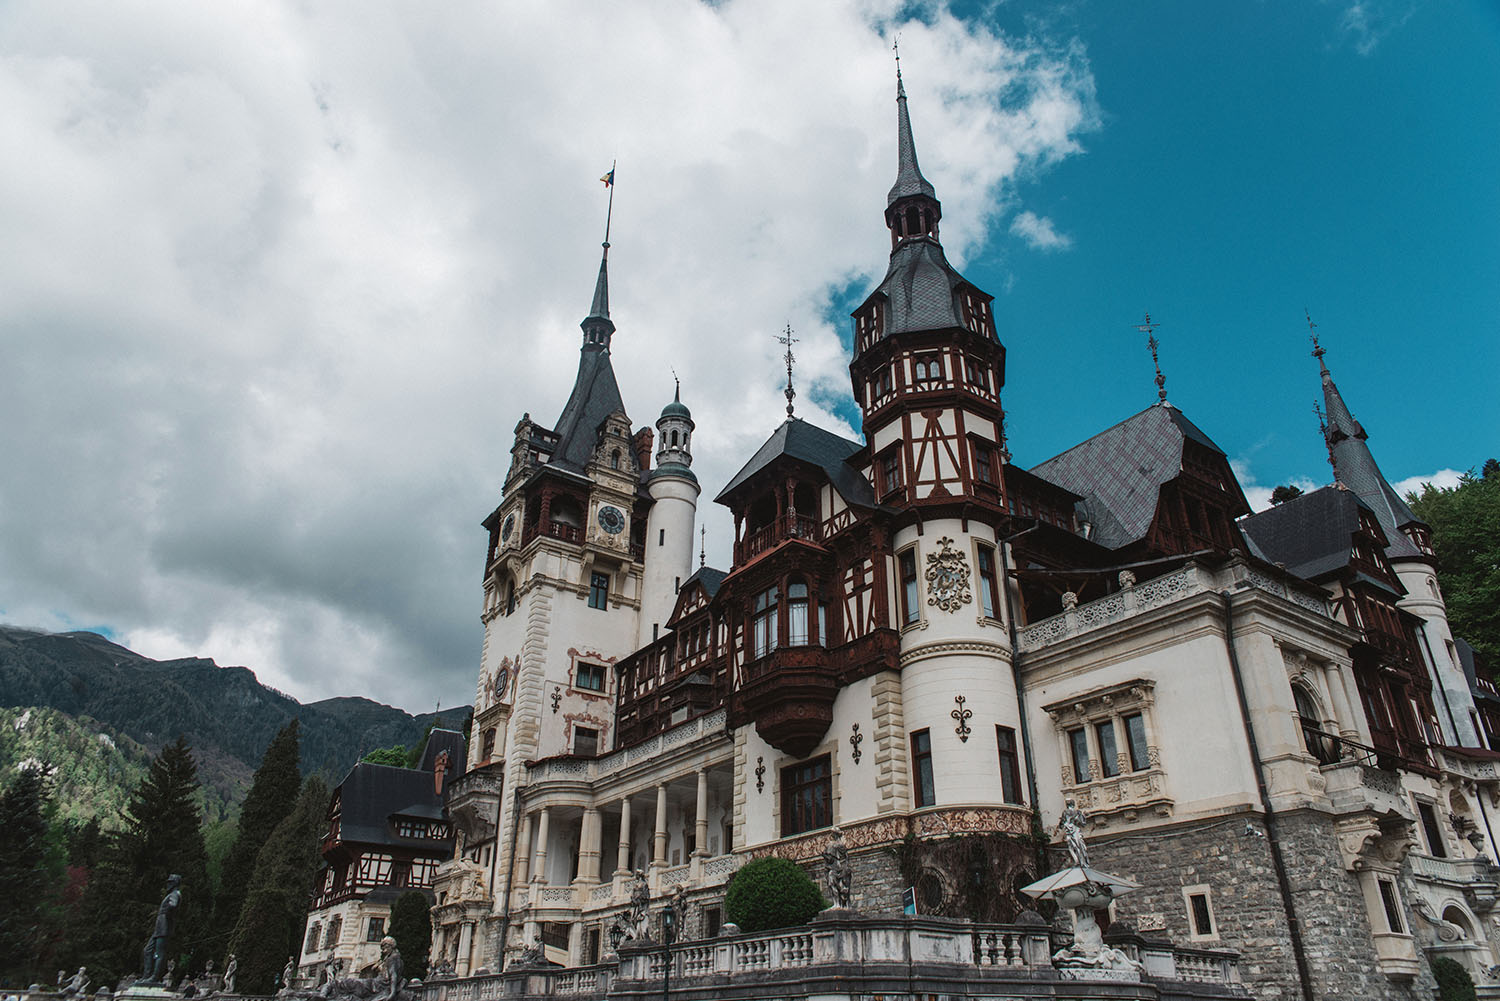 The Stunning Peleş Castle in Romania